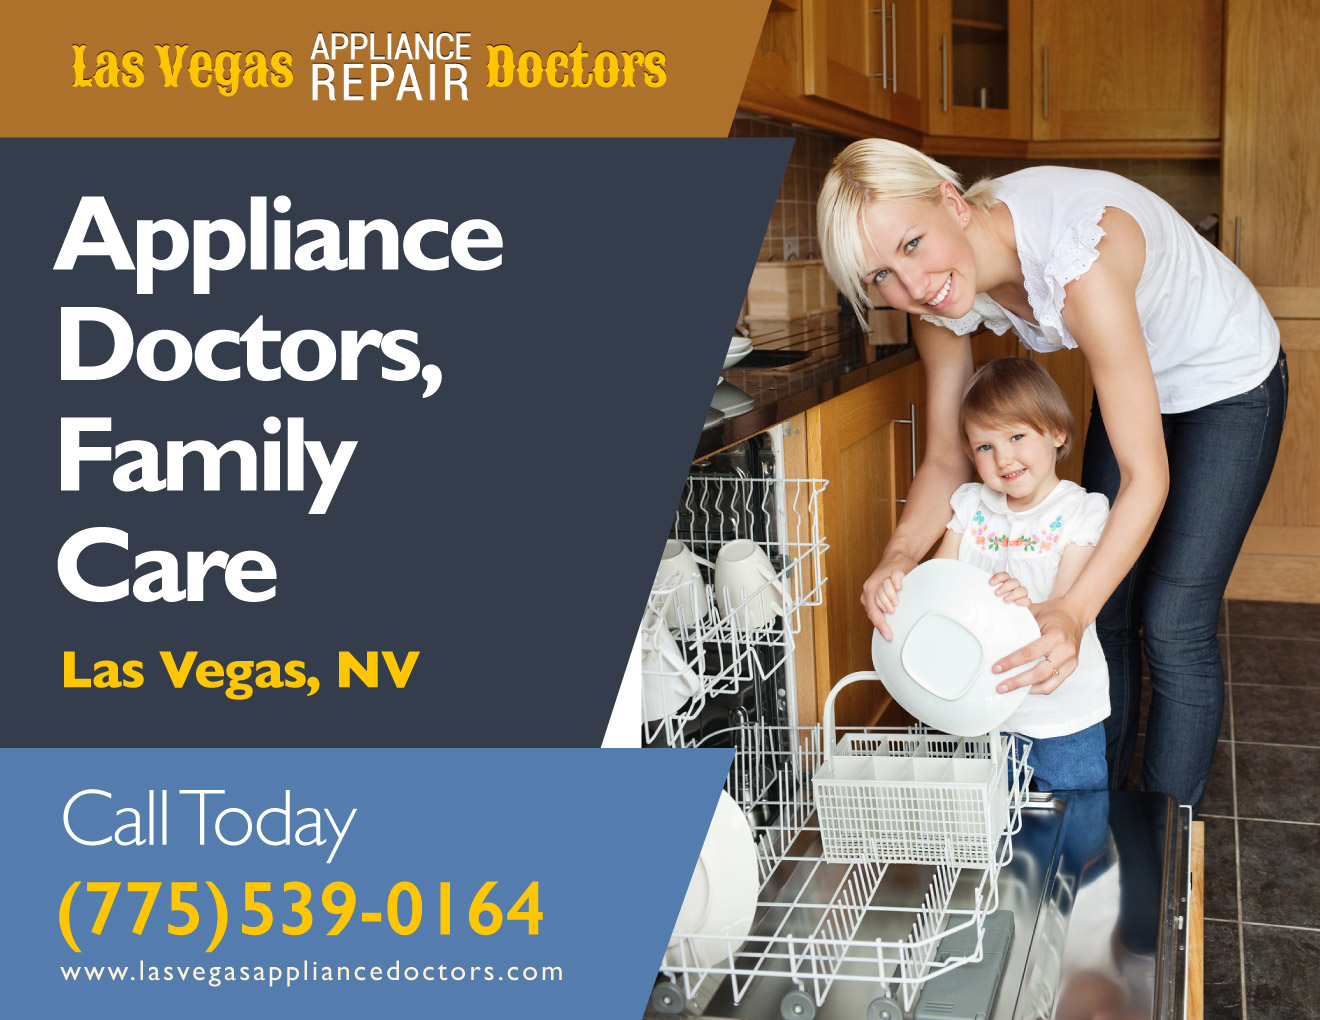 Las Vegas Appliance Repair Doctors